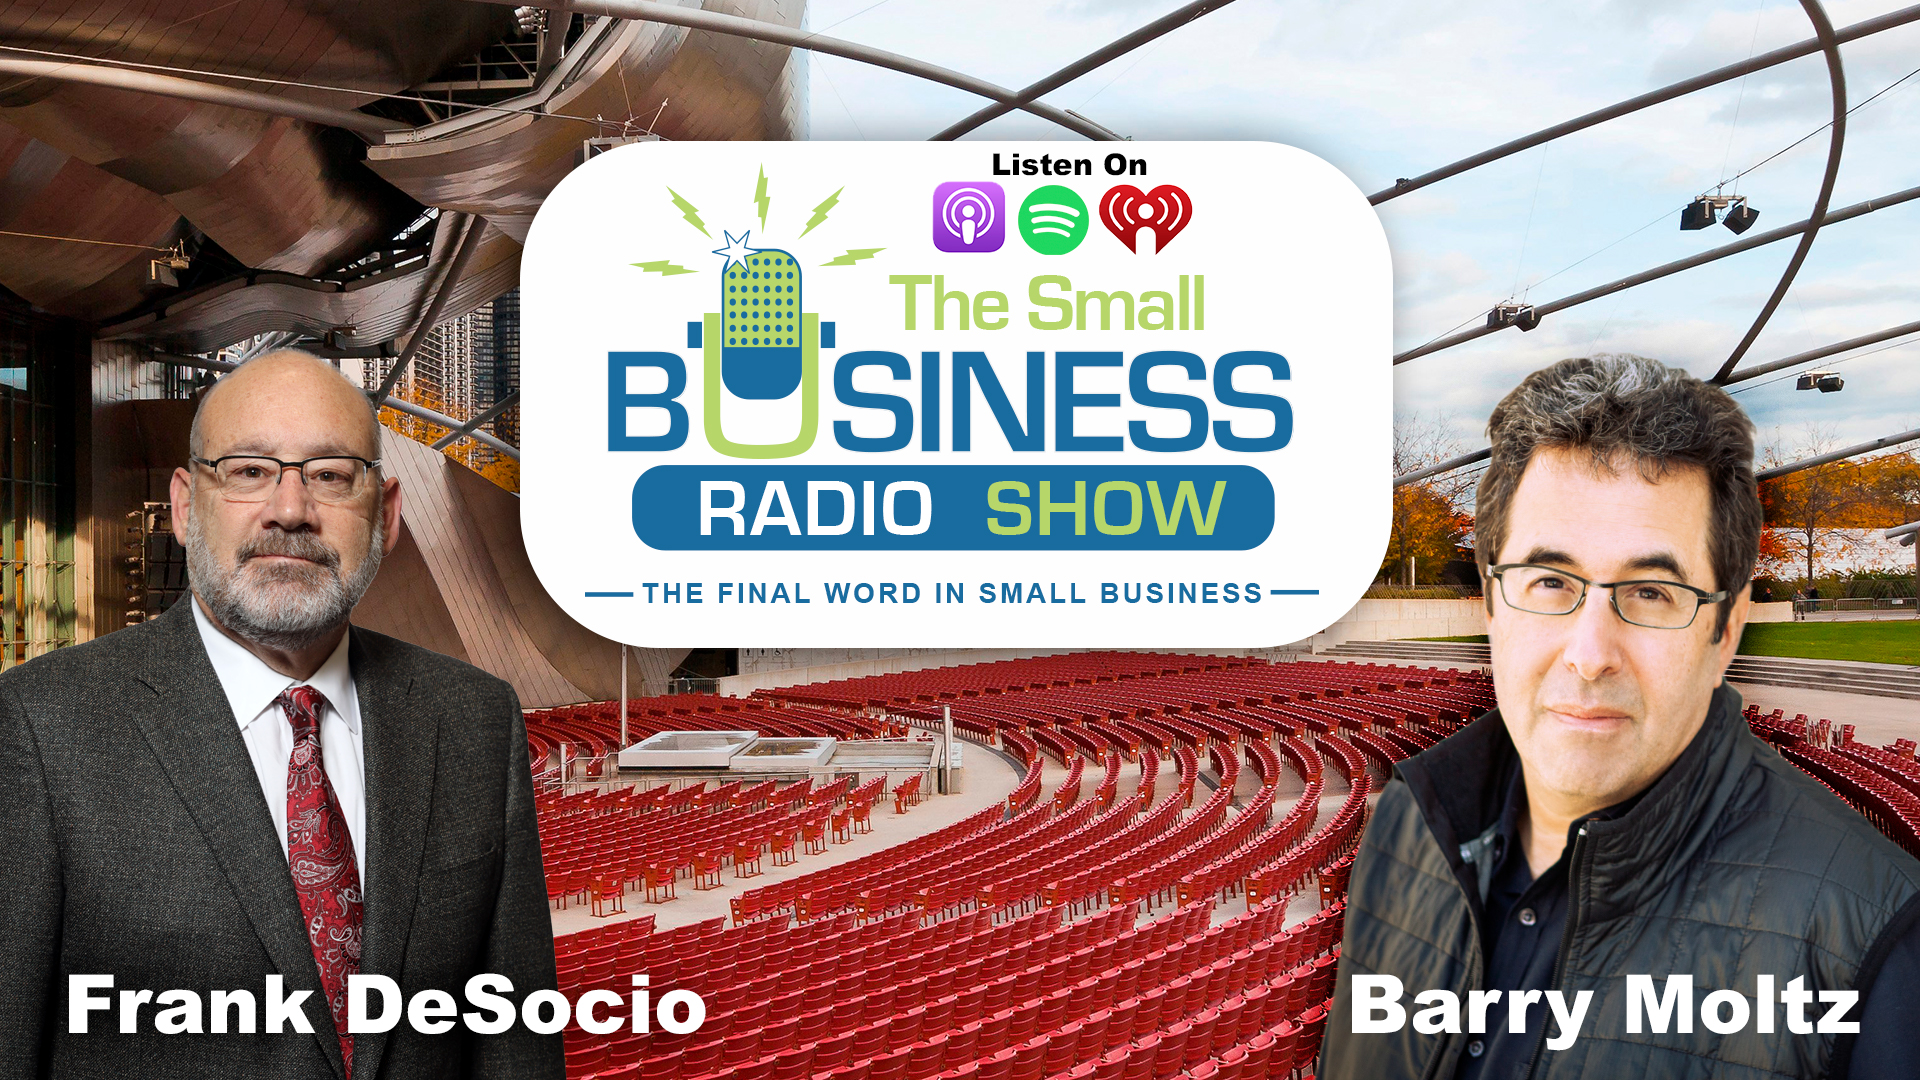 Frank DeSocio on The Small Business Radio Show